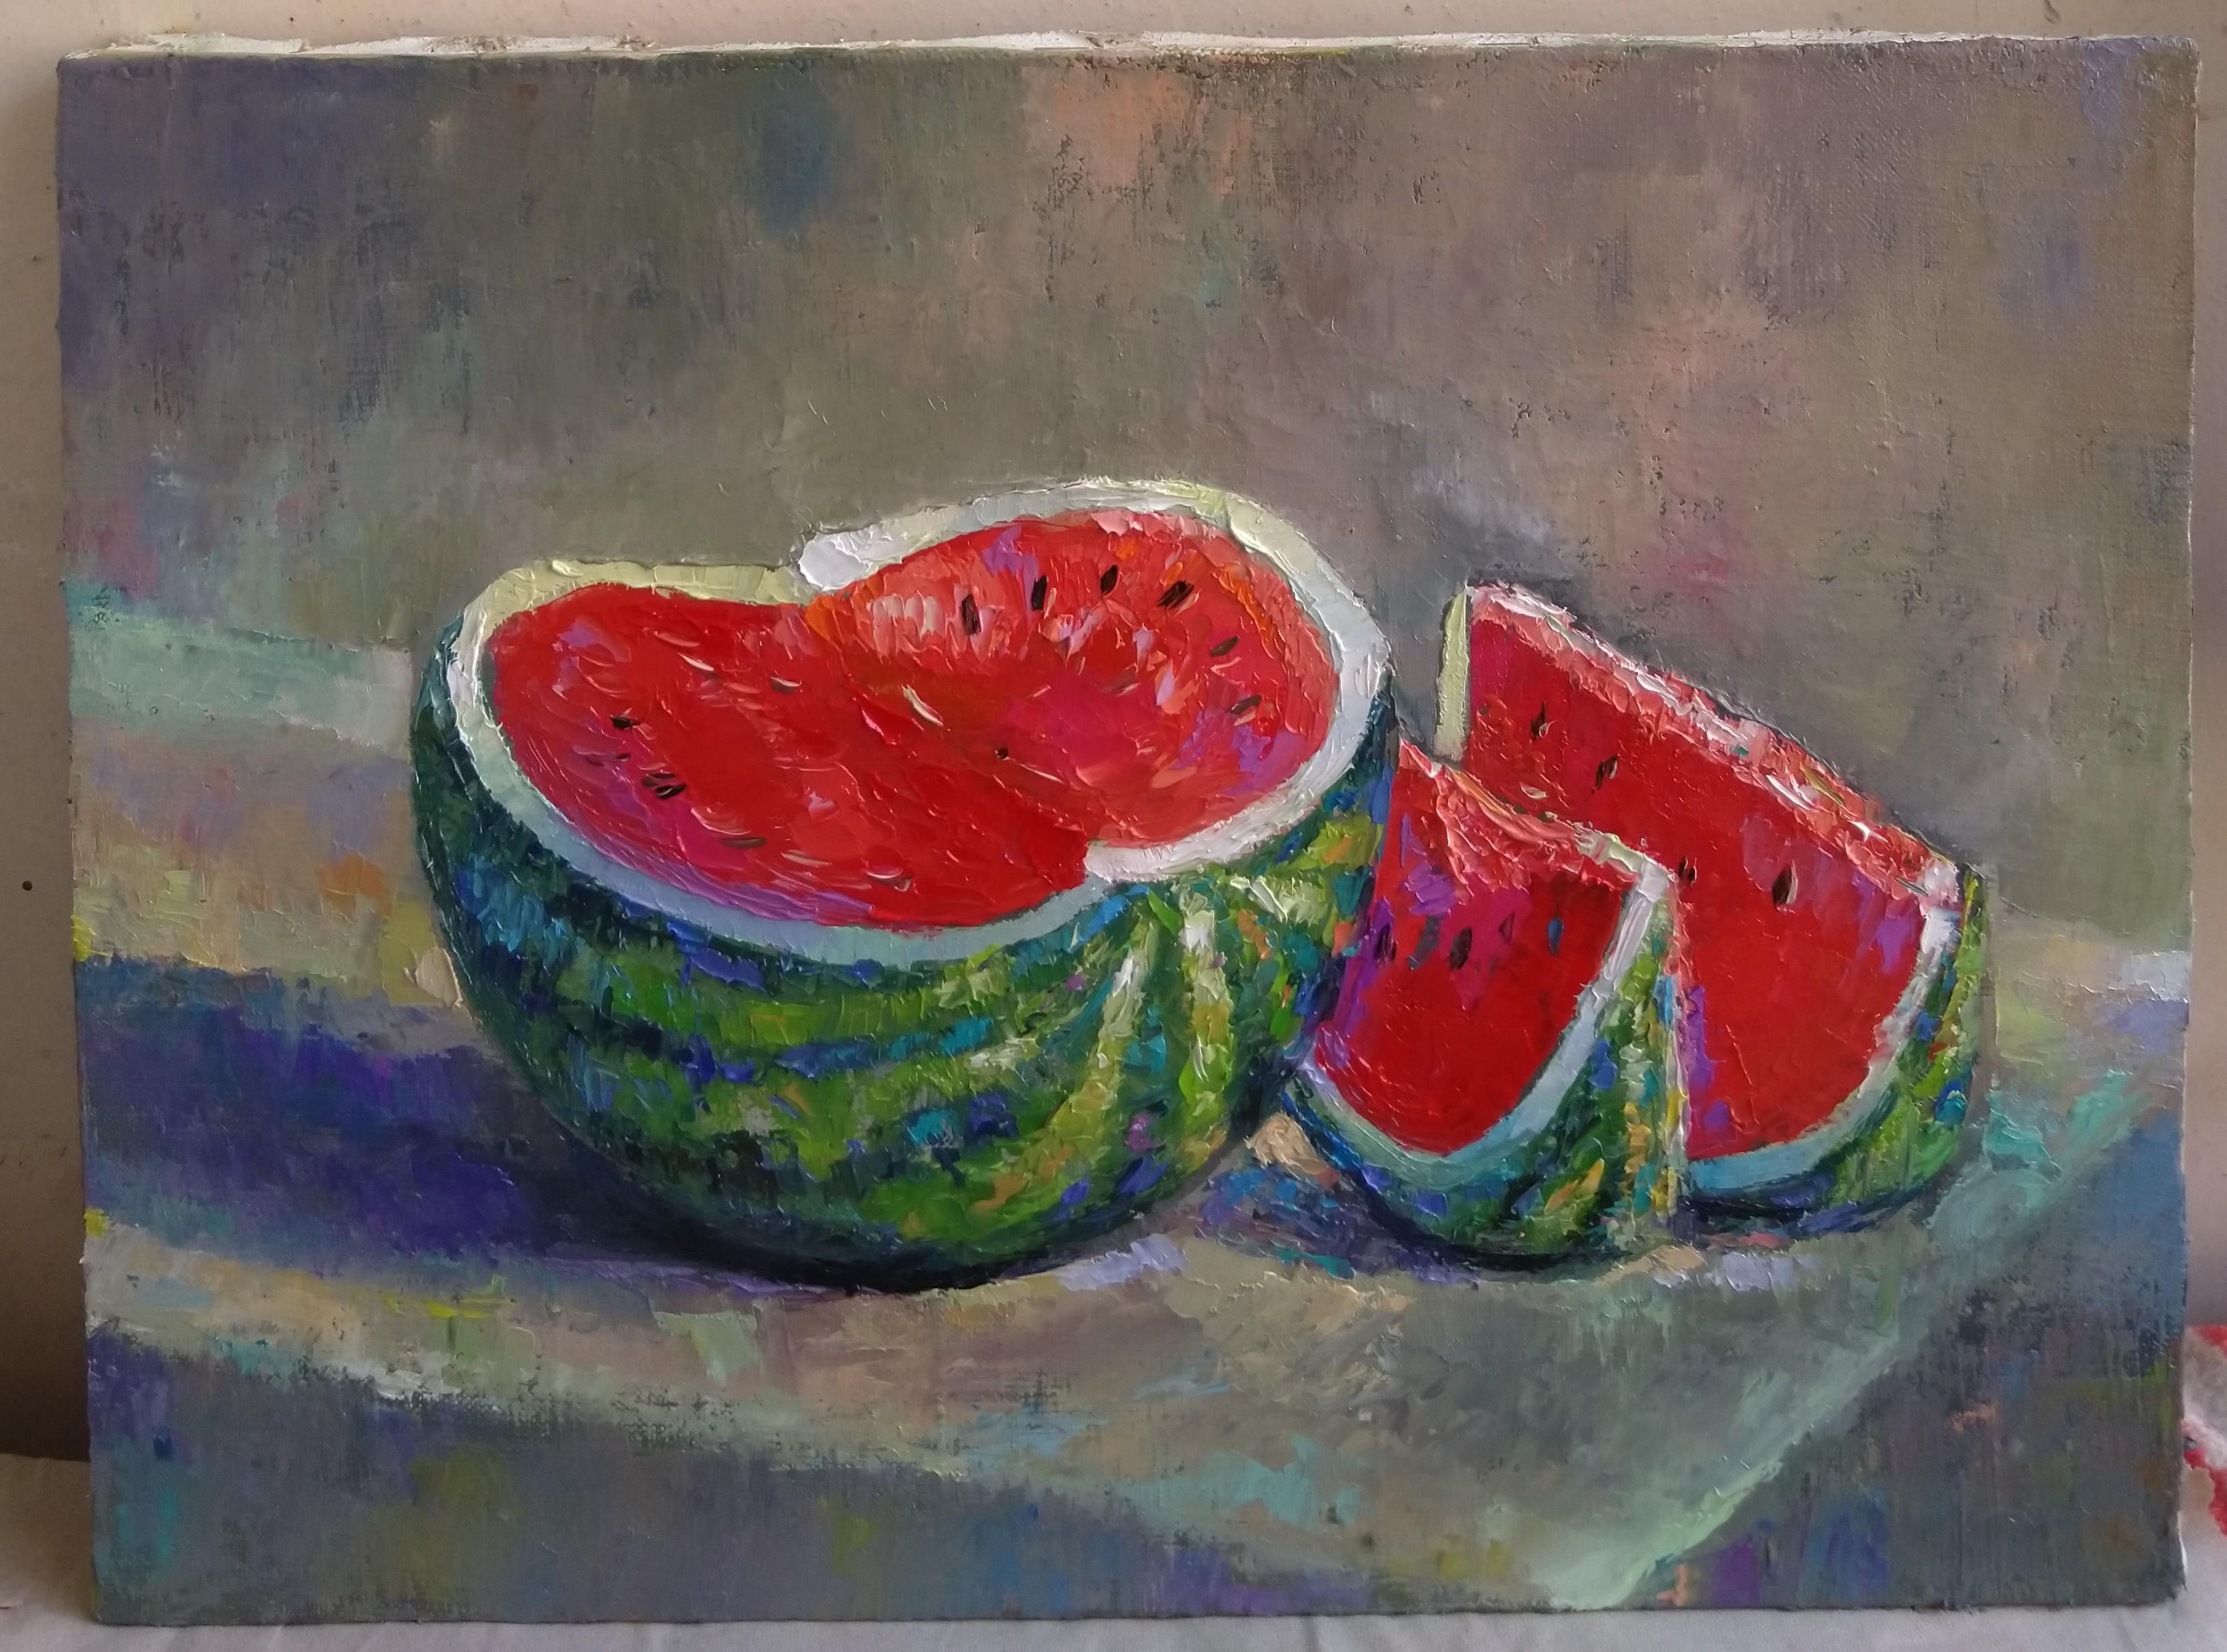 Armenian Contemporary Art by Kamsar Ohanyan - Watermelon For Sale 2